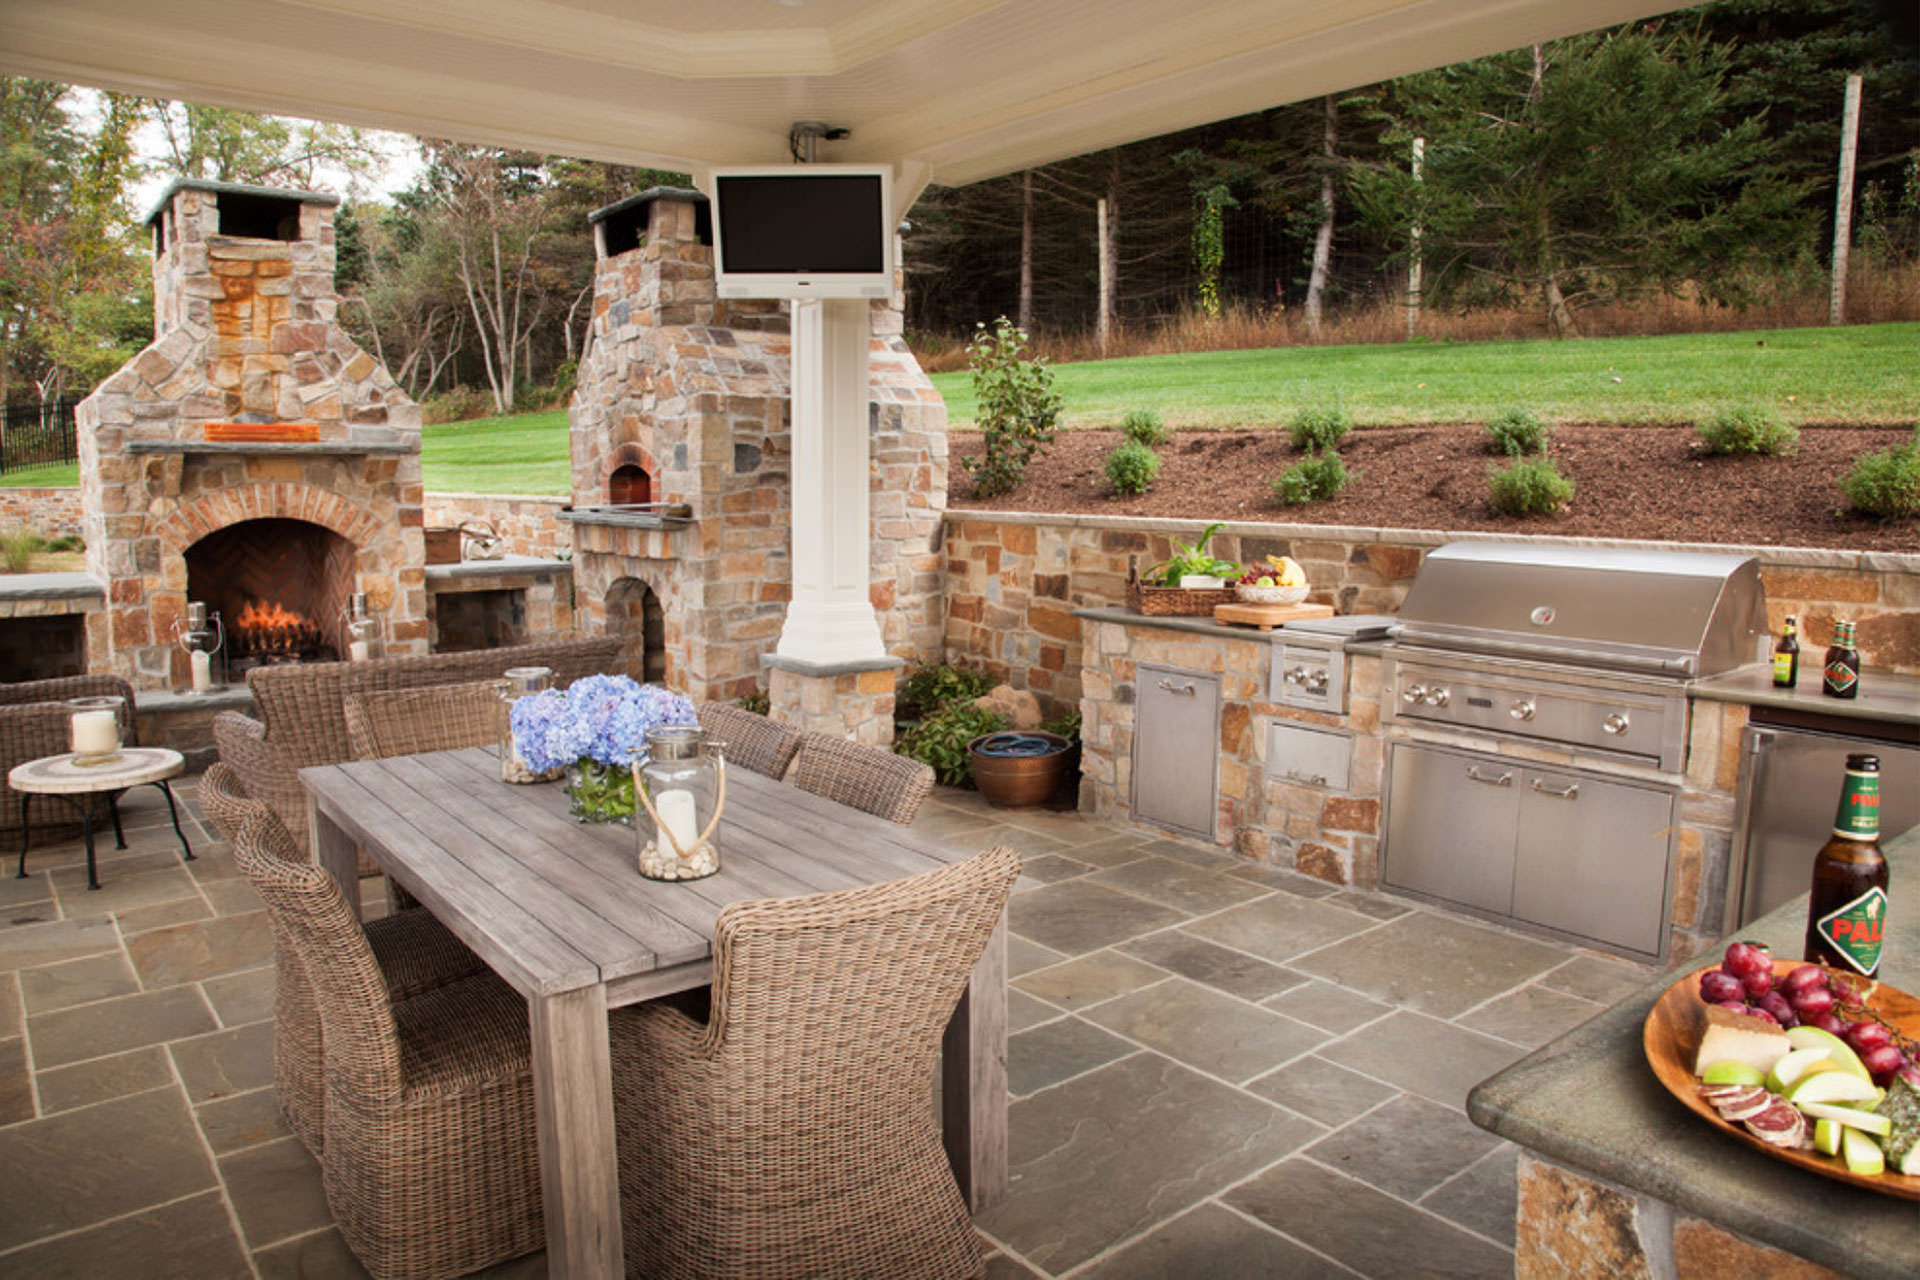 Outdoor Patio Kitchen Designs
 Five Popular Design Features for Outdoor Entertaining